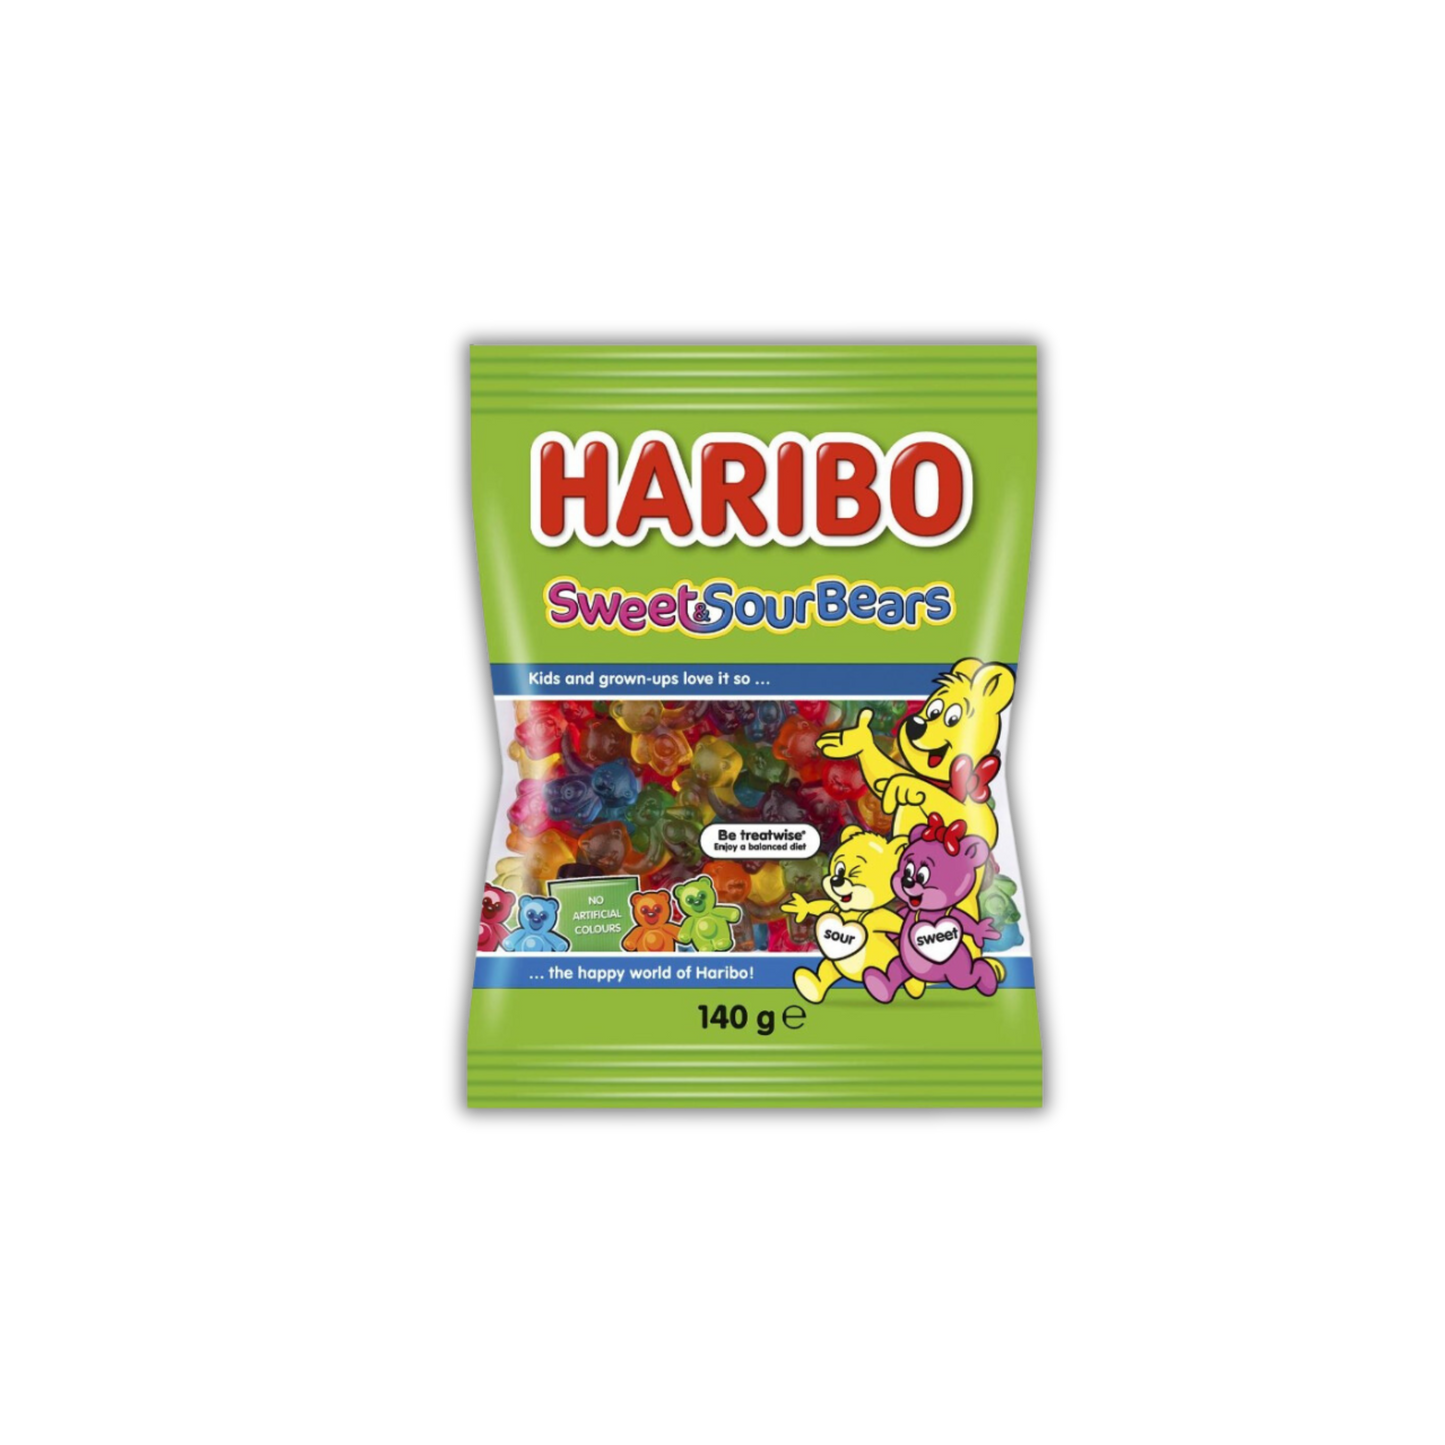 Haribo Sweet & sour Bears Lollies Bag